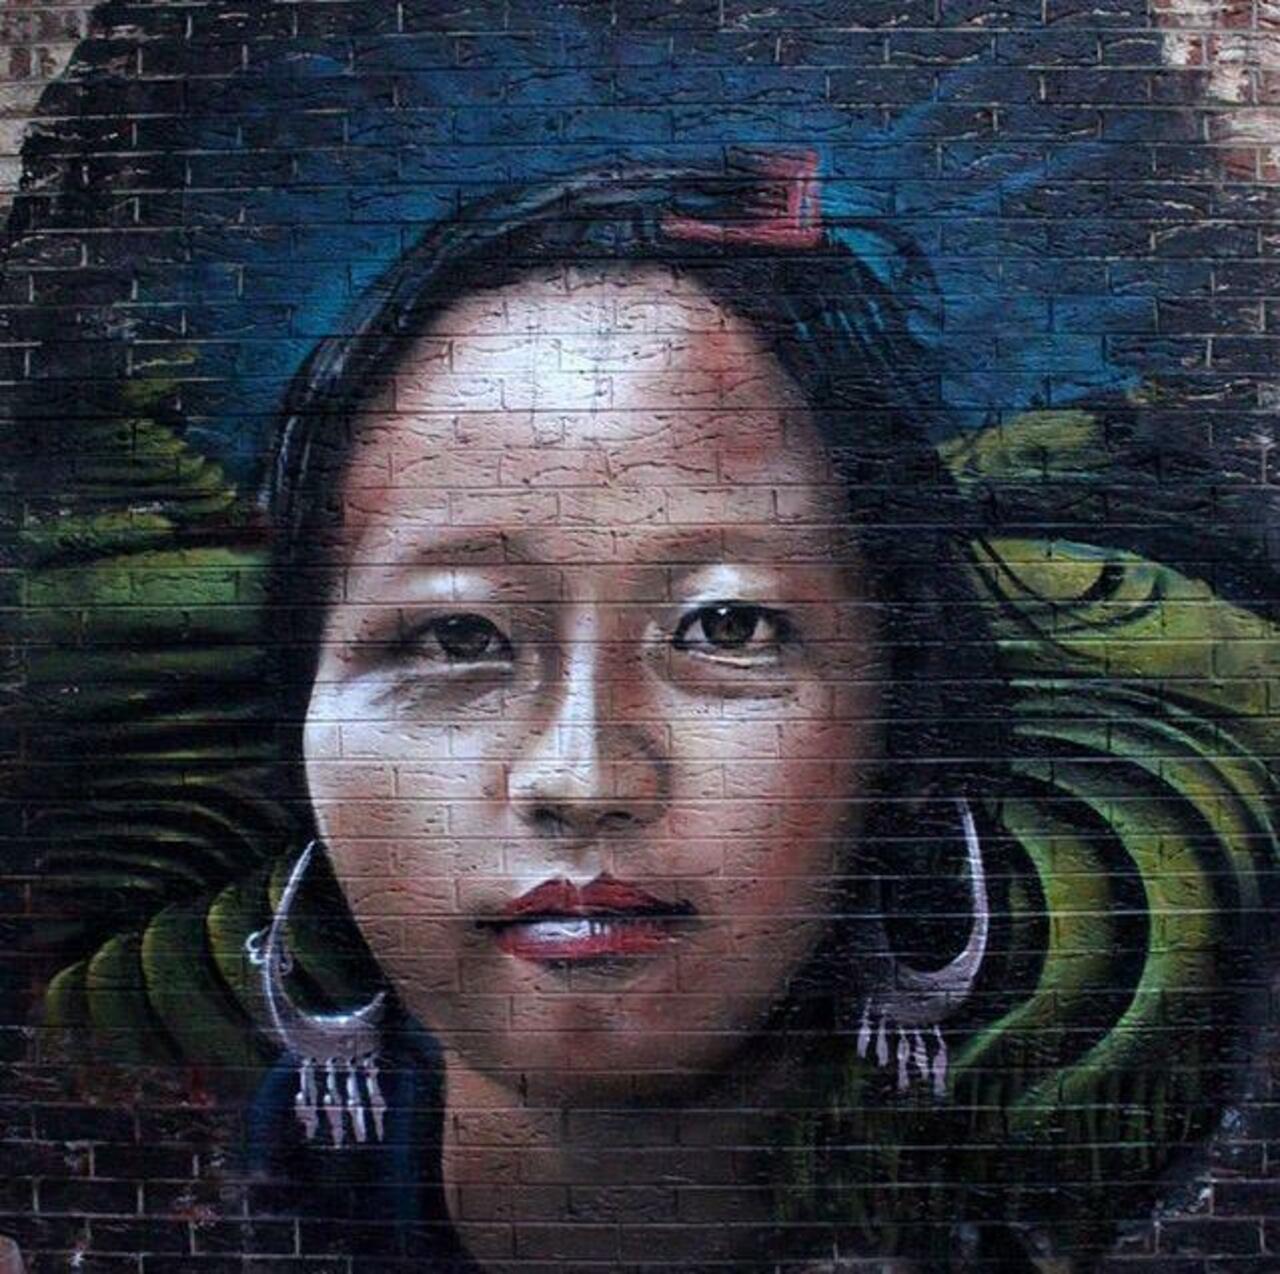 RT @BlossomTweetMe: Nice! Street Art by cto 

#art #mural #graffiti #streetart http://t.co/HNMENLFCWZ MT @GoogleStreetArt